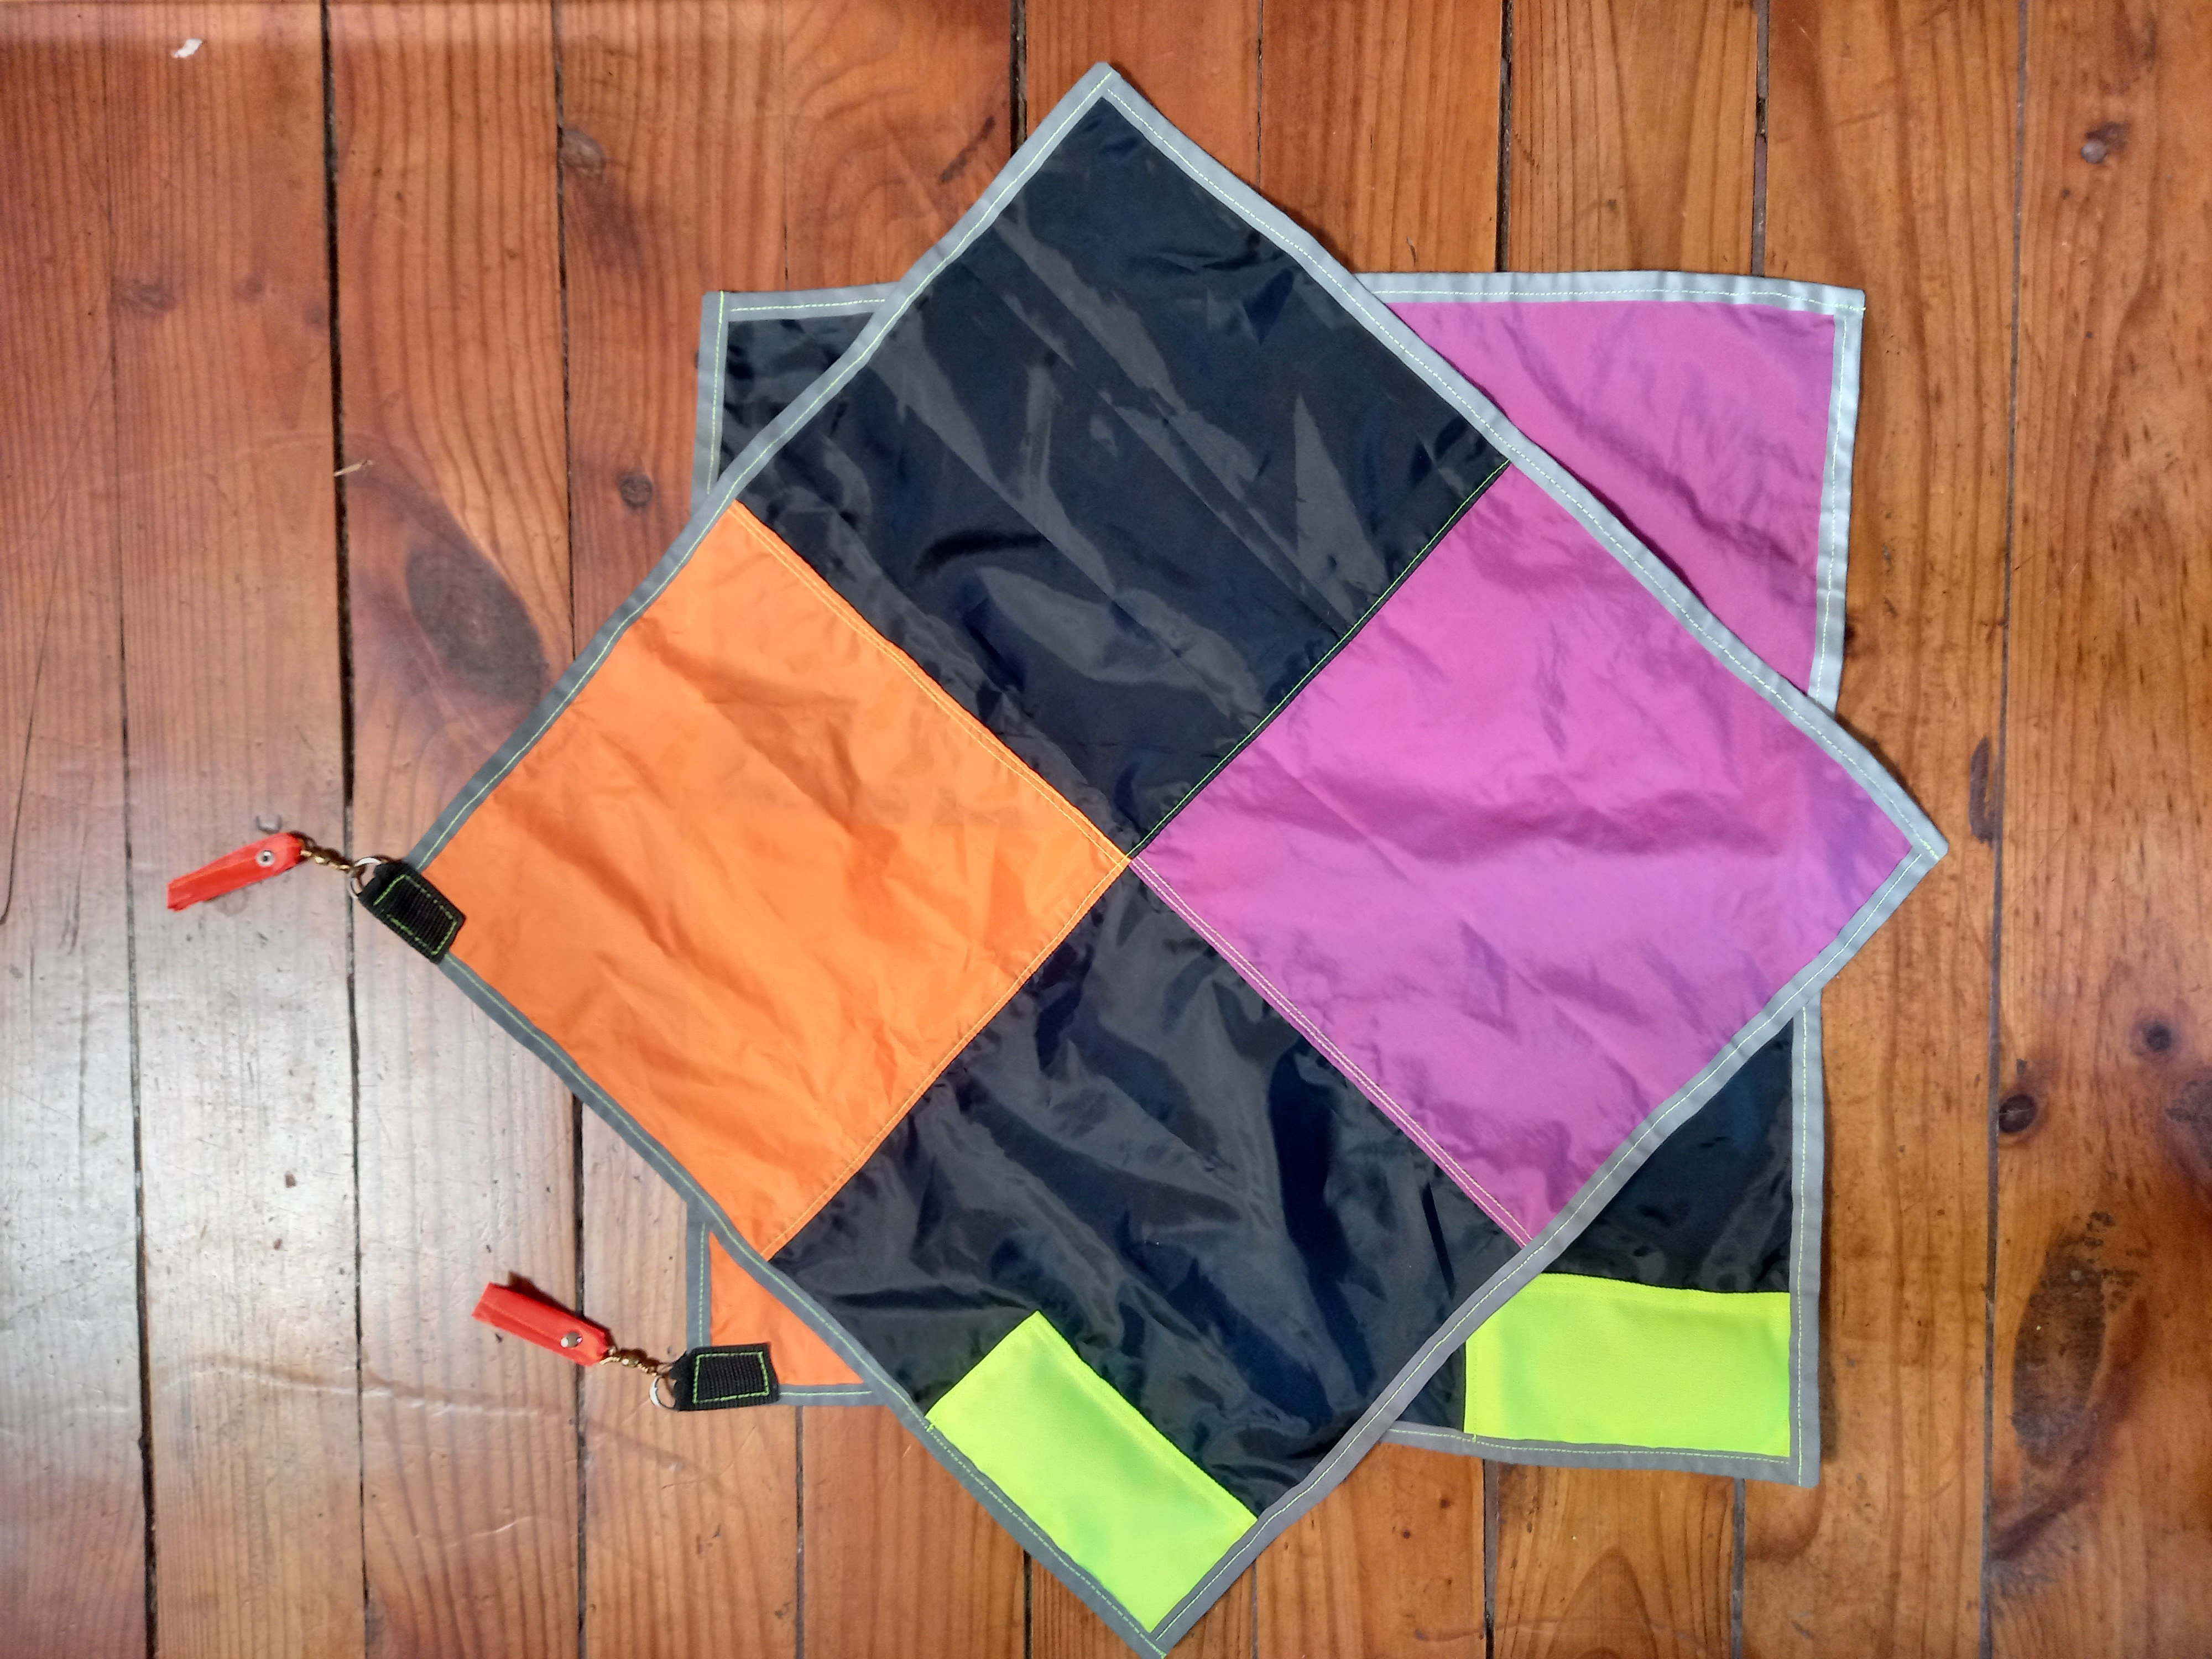 Banderas Tri-color Fucsia/Naranjo/Negro con reflectante.